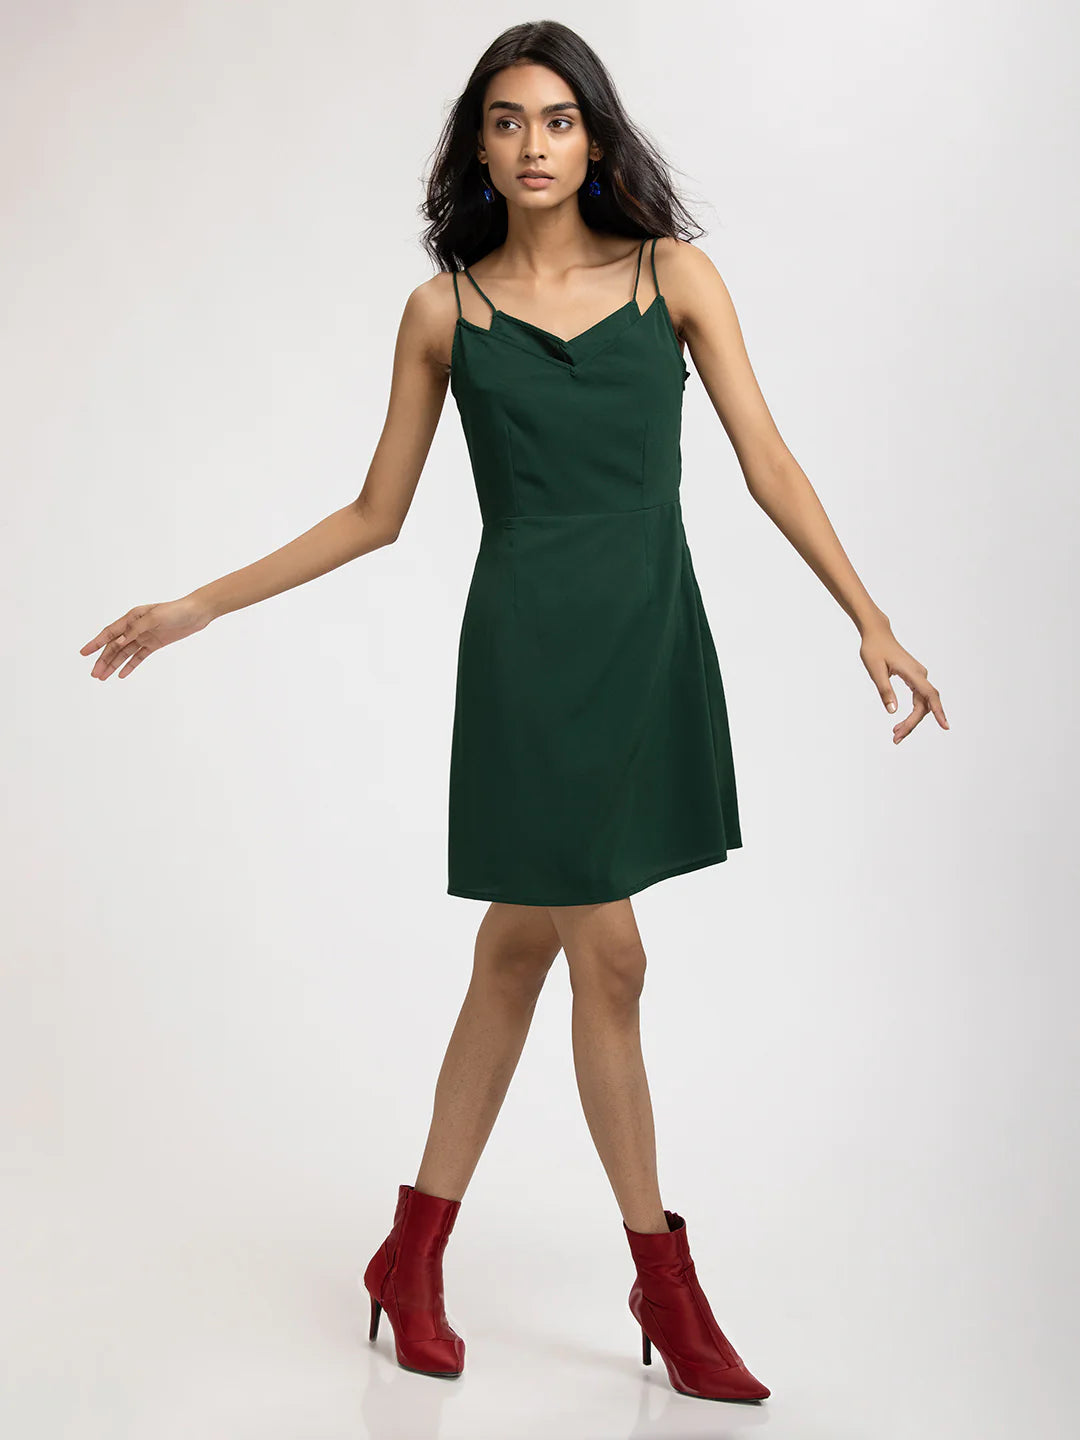 Chic Mini Dress | High-Confidence Chic Mini Dress